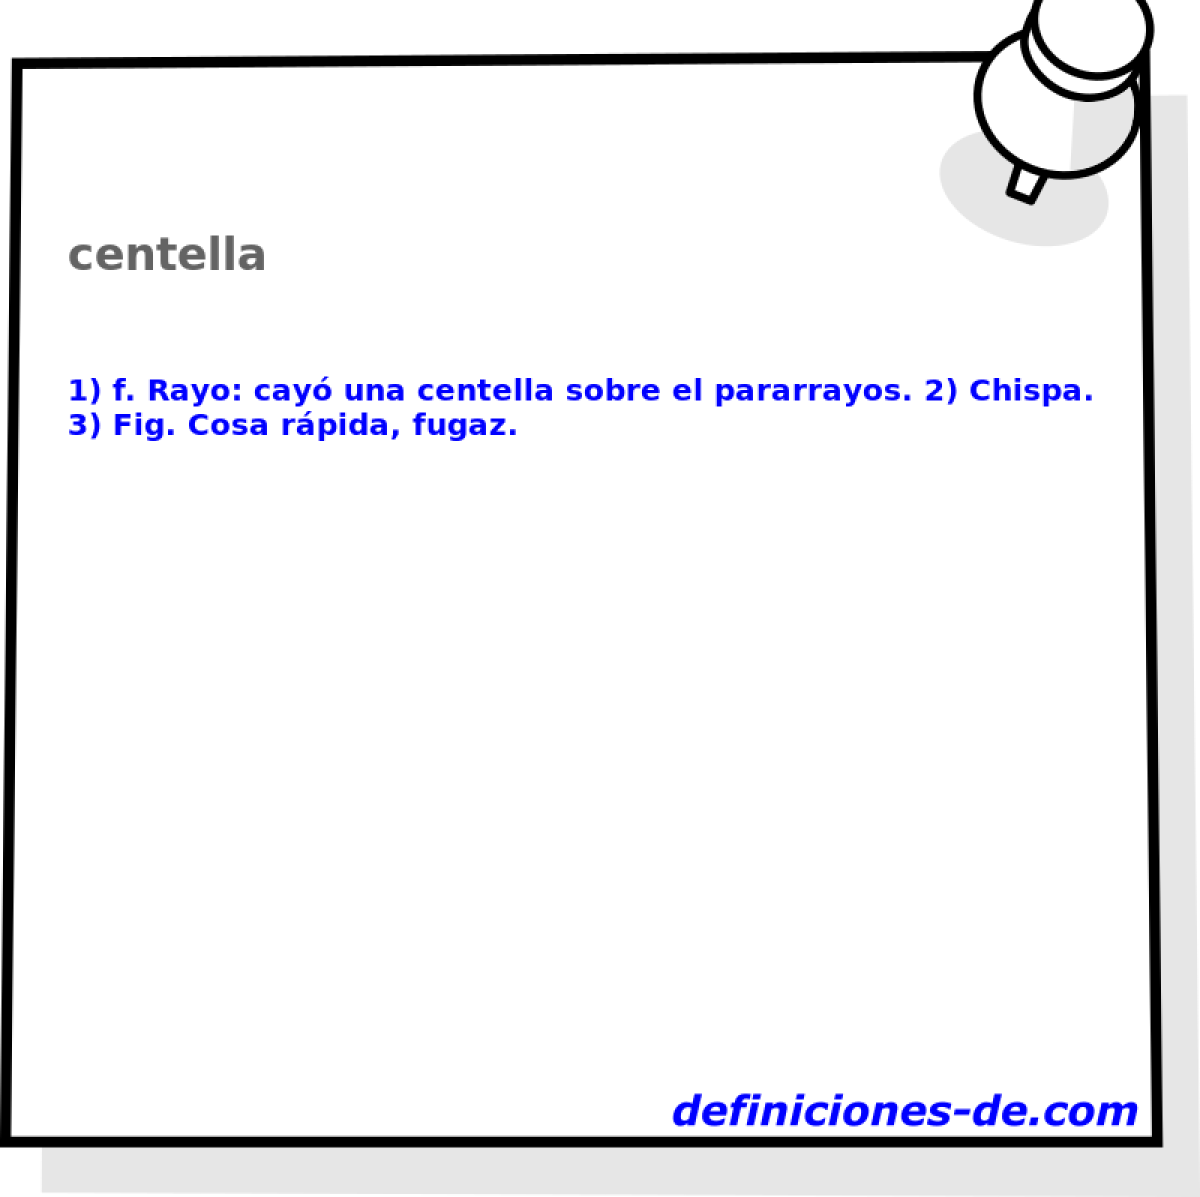 centella 